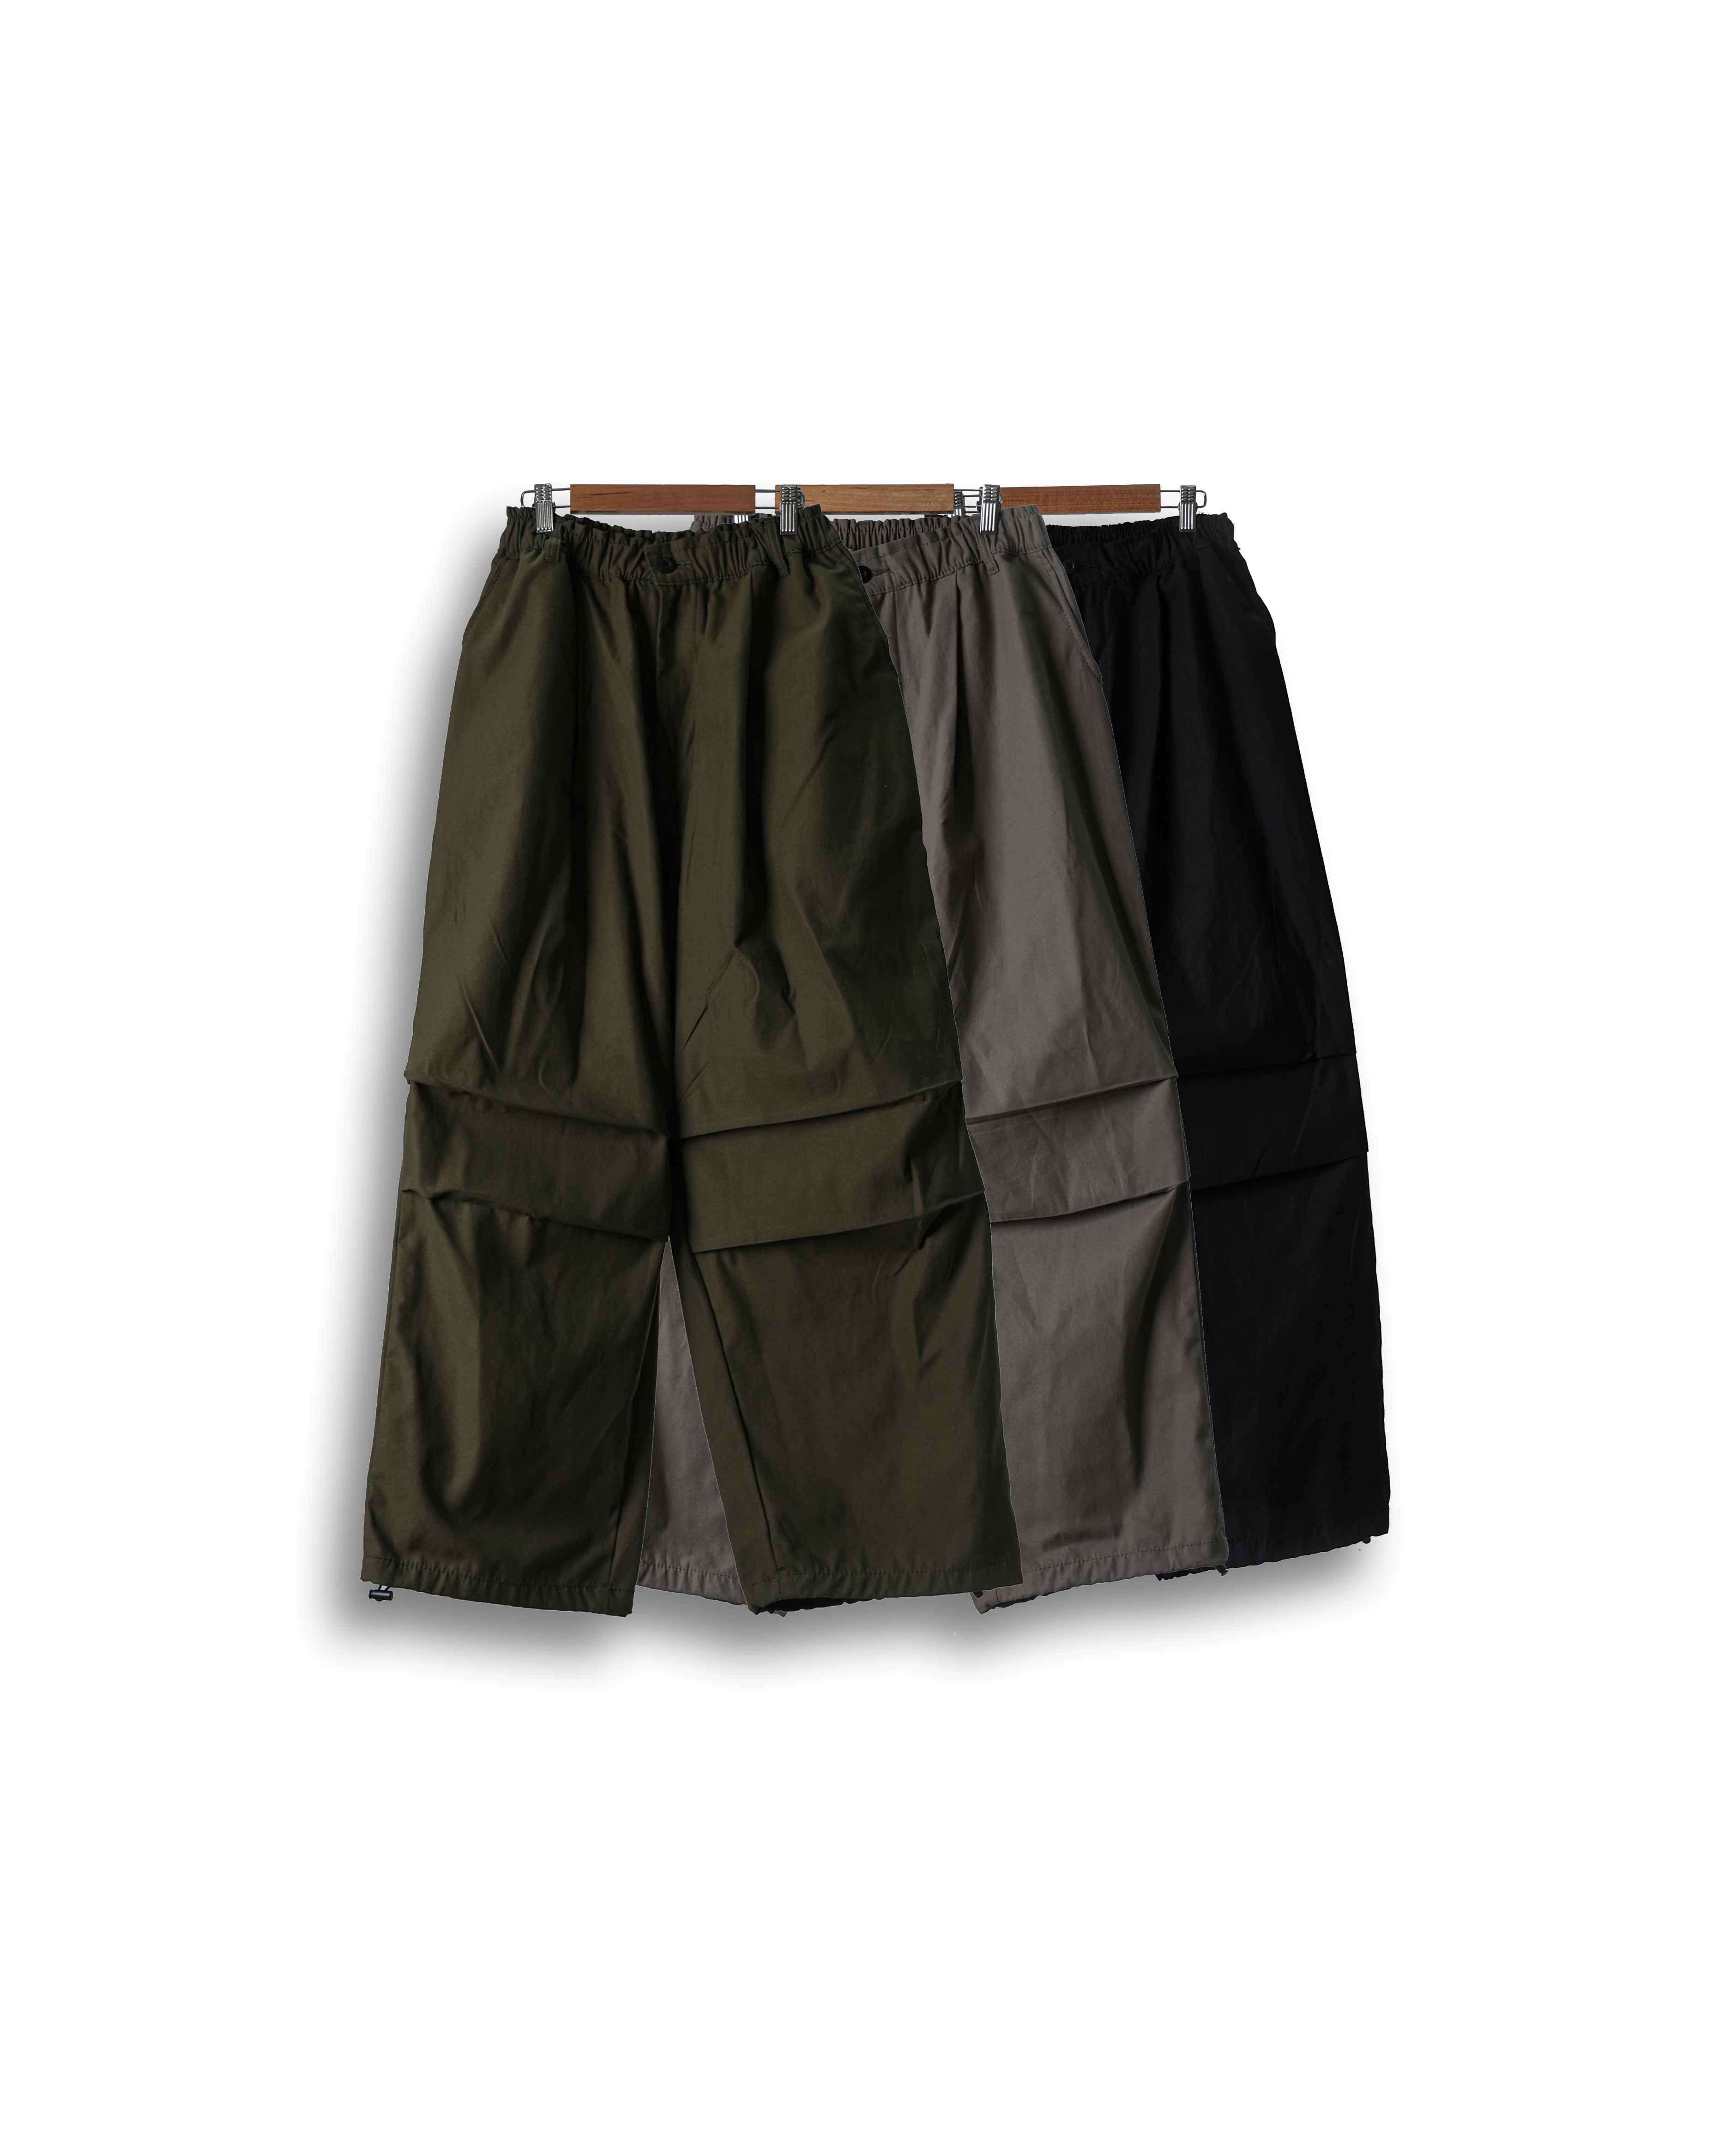 WAOT Bulky Cotton Parachute Pants (Black/Khaki/Gray)